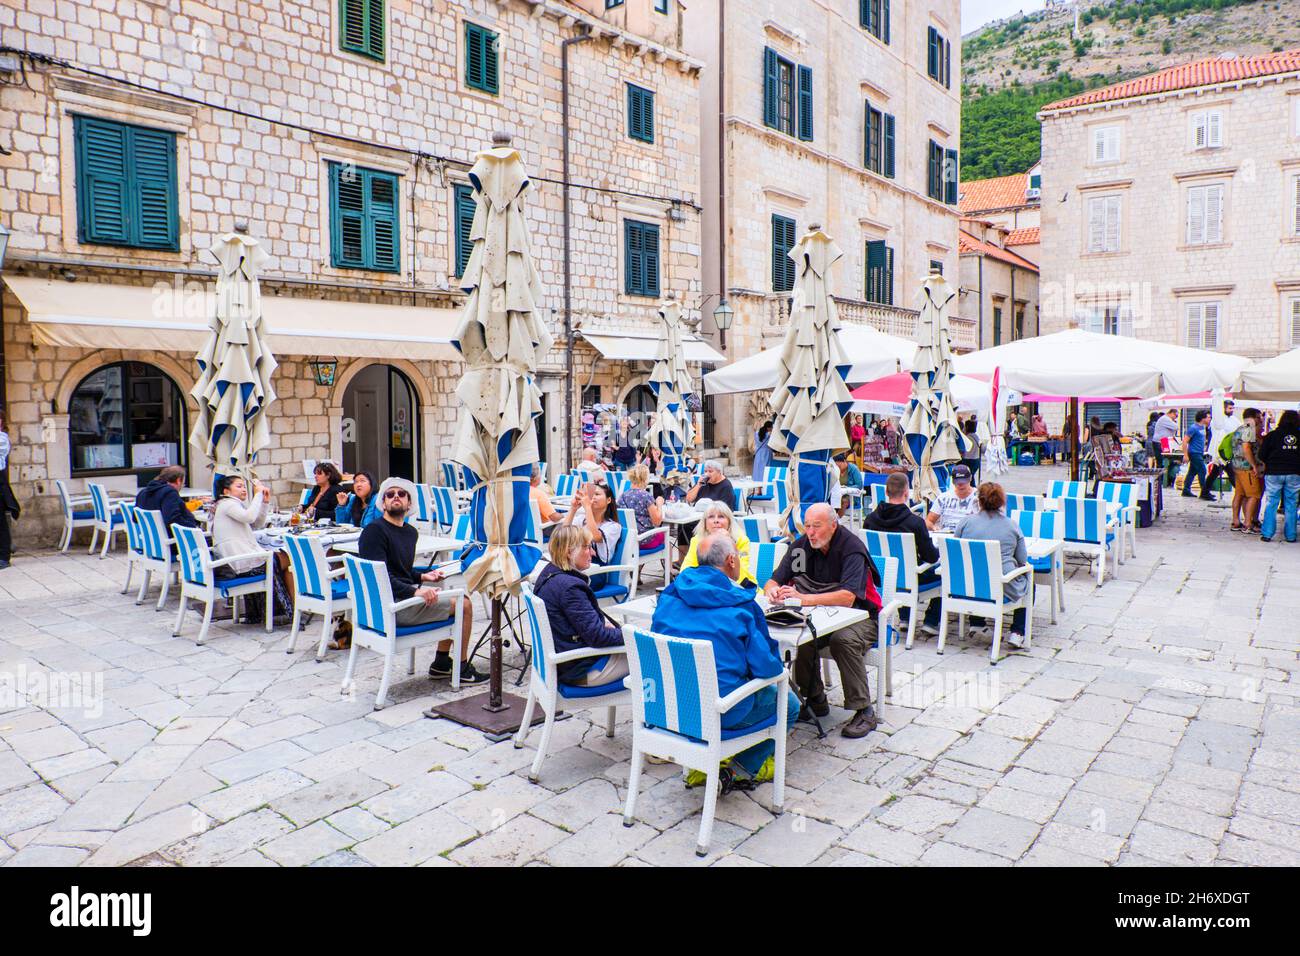 Cafe restaurante Kamenice, Gunduliceva Poljana, Grad, casco antiguo, Dubrovnik, Croacia Foto de stock